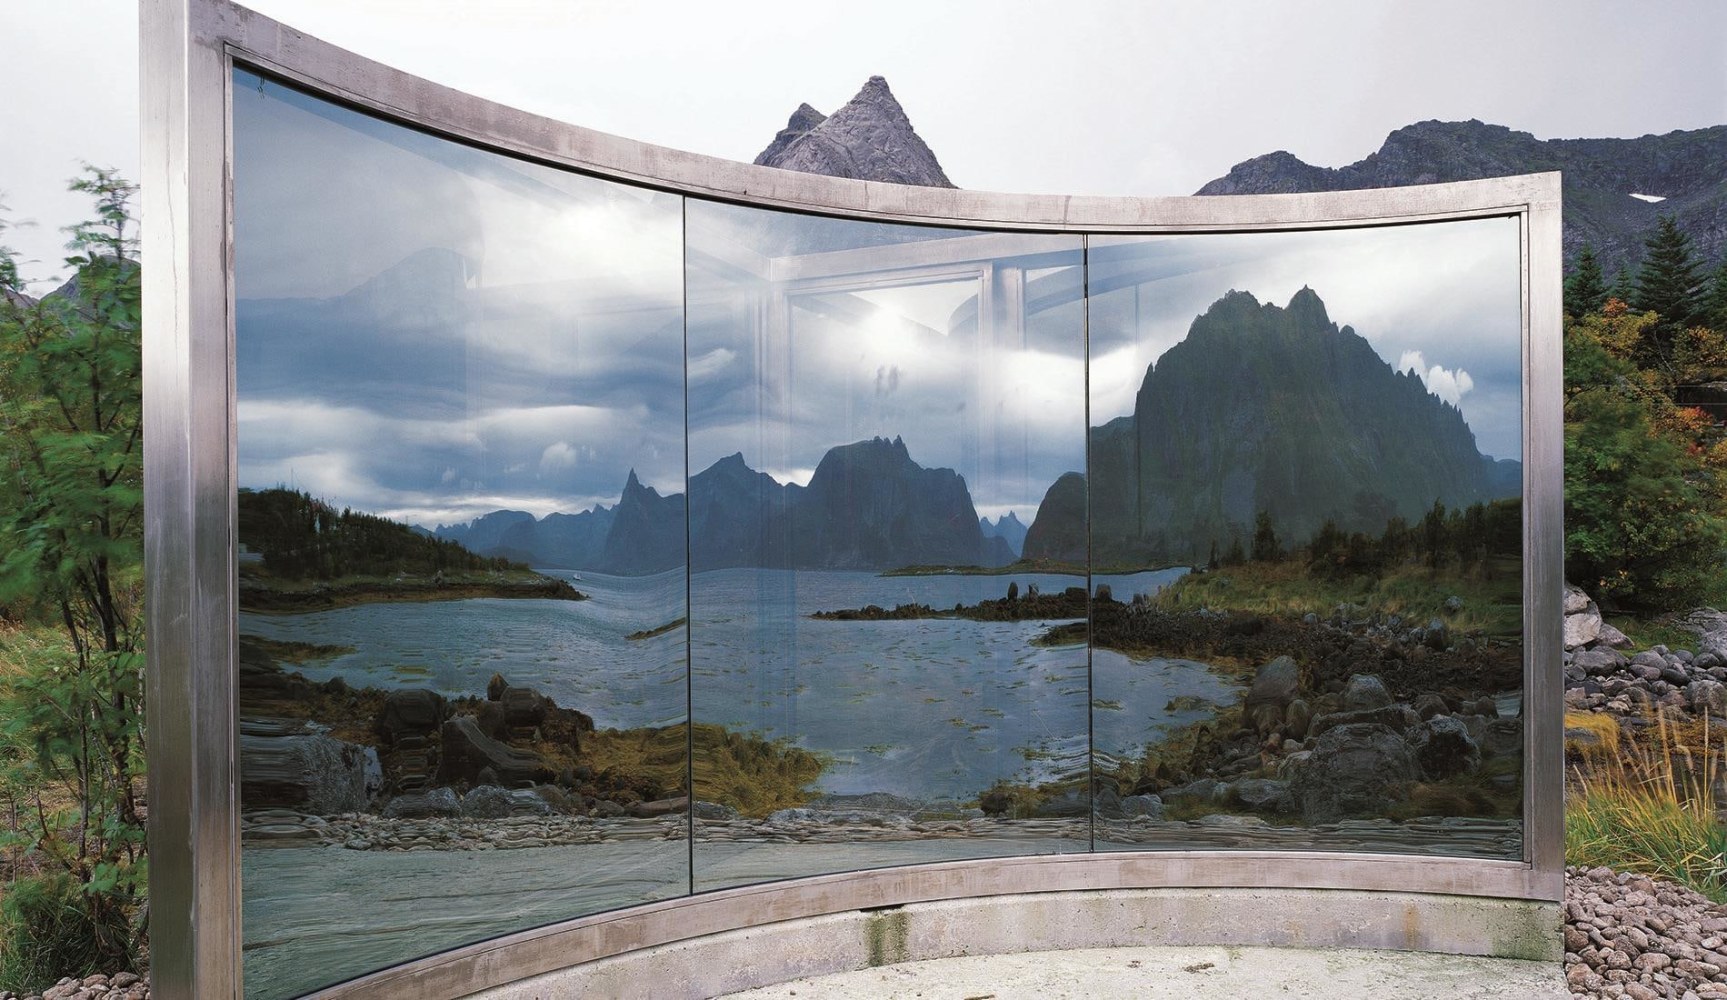 Dan Graham, Untitled, 1996
Two-way mirror construction, stainless steel
Artscape Nordland,&amp;nbsp;Lofoten Archipelago, Norway

&amp;nbsp;

INQUIRE





